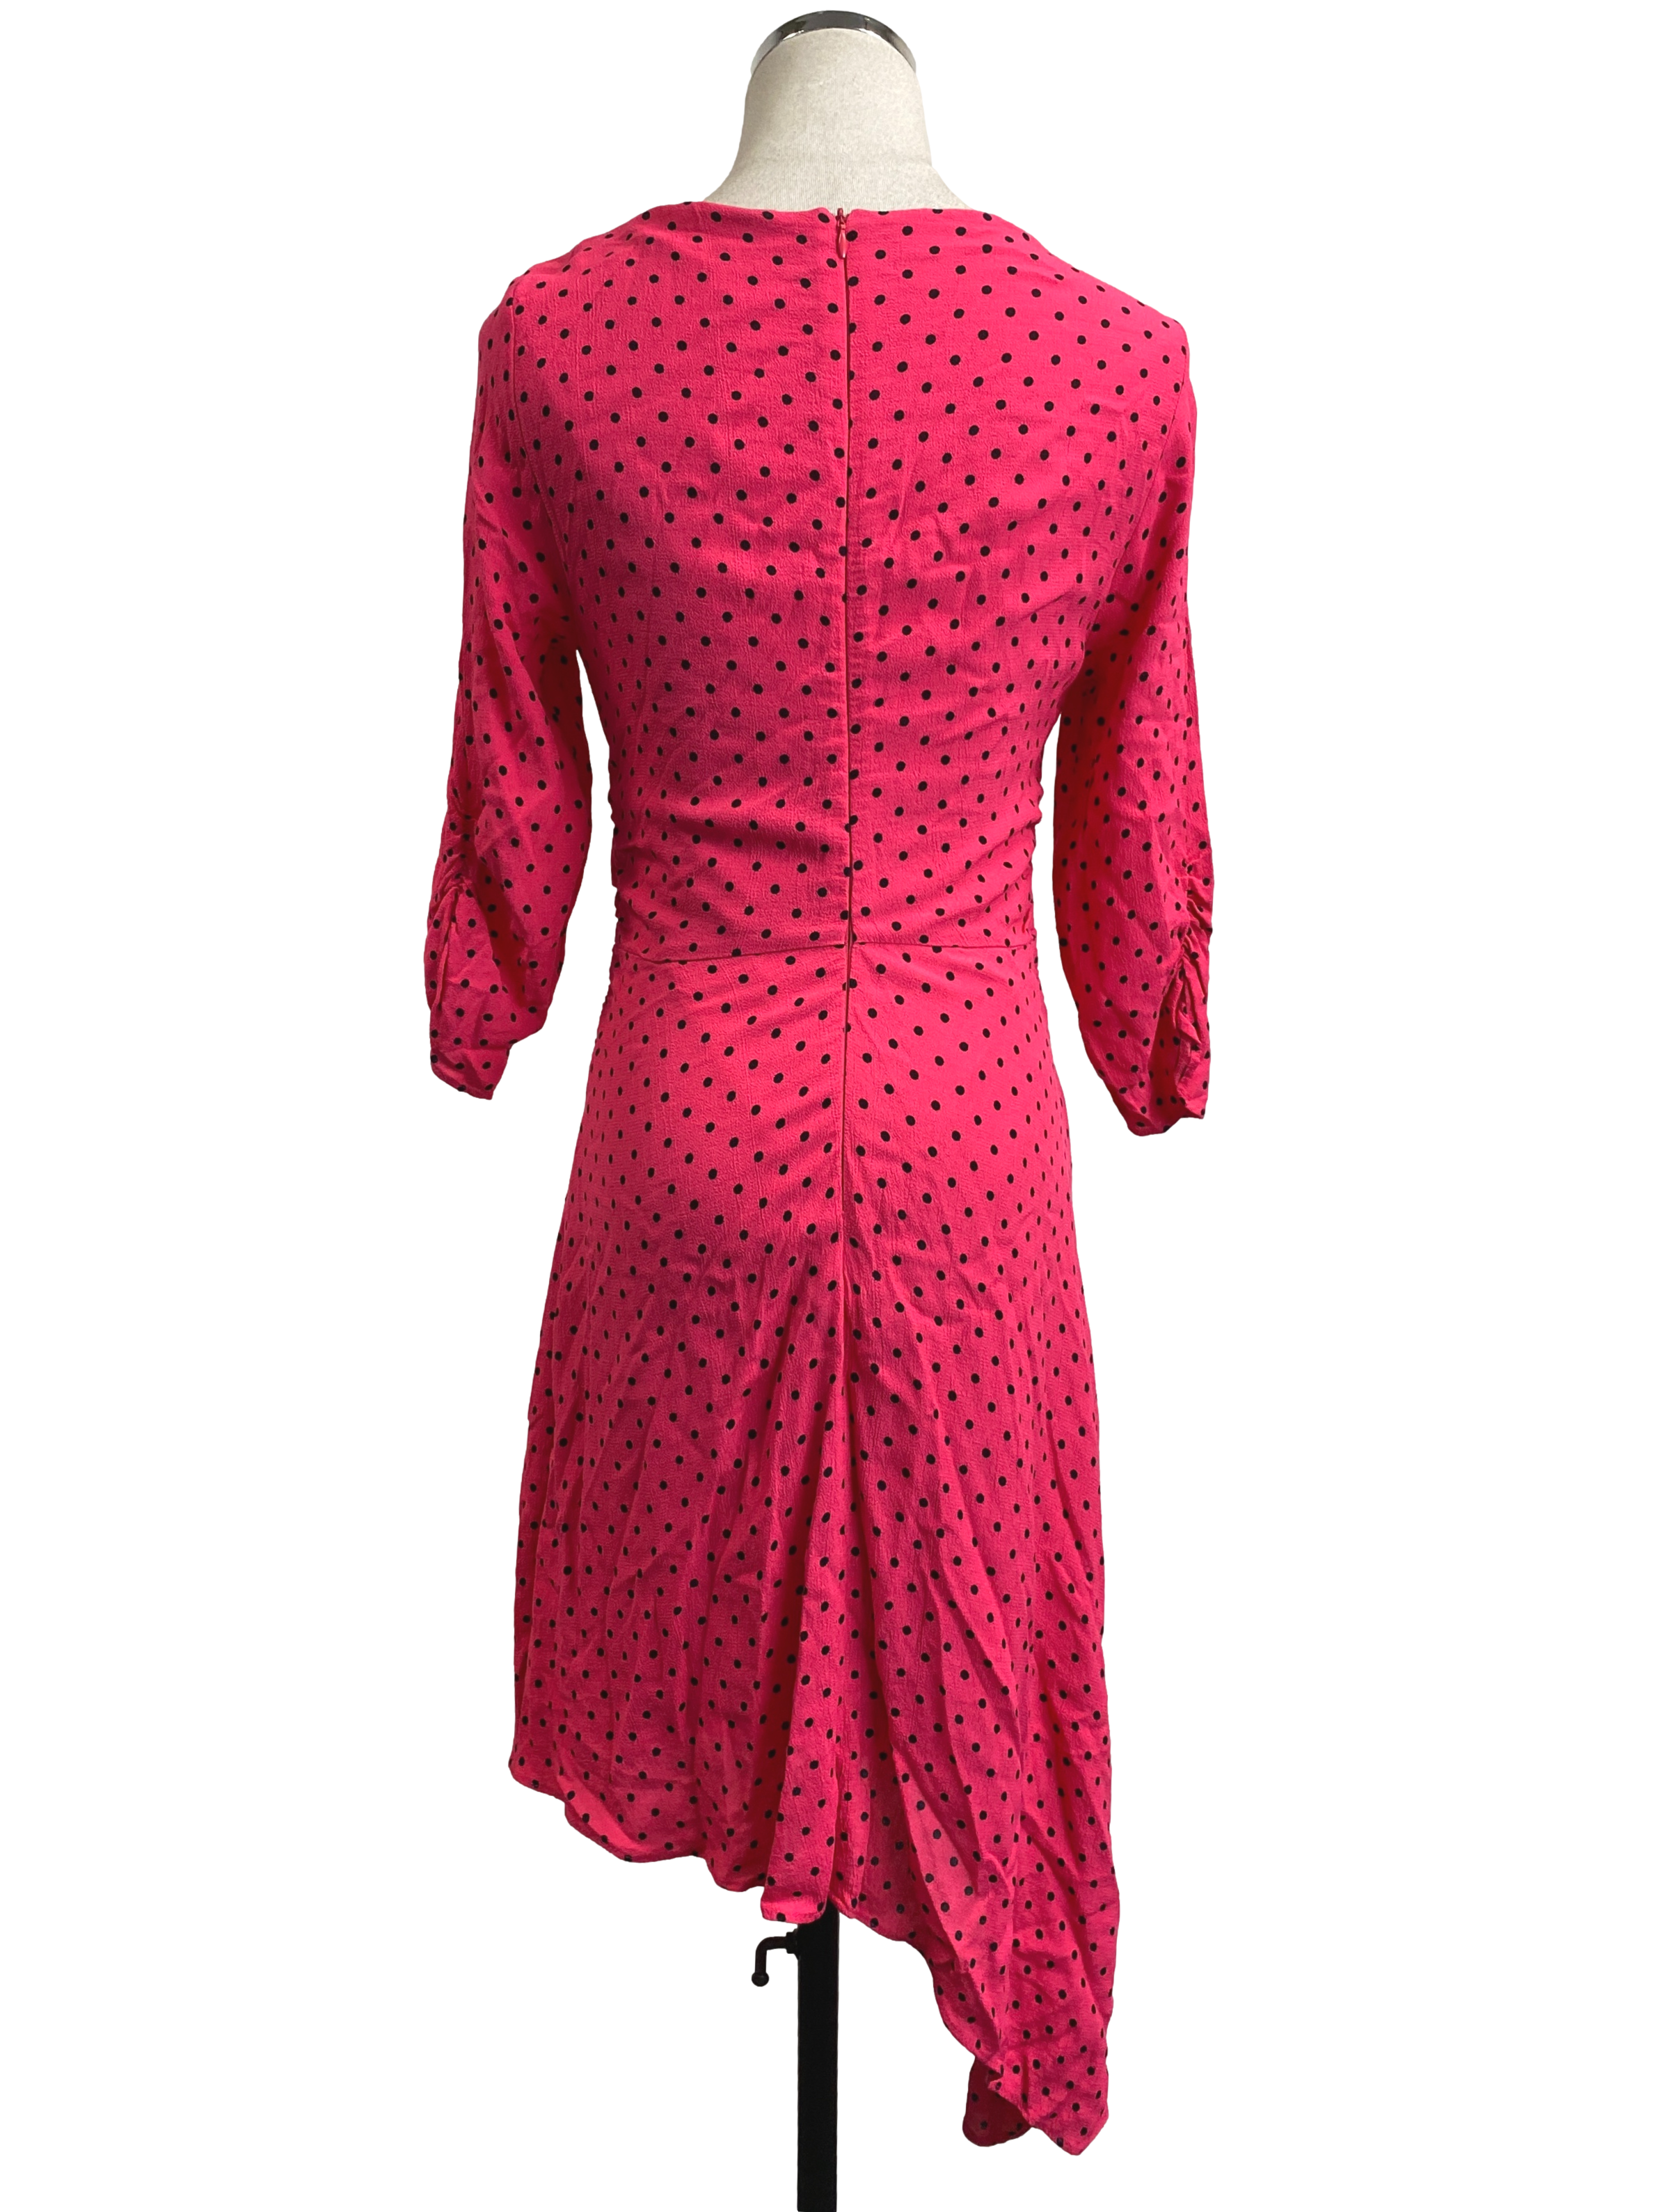 Hot Pink Polka Dot Front Ruched Dress